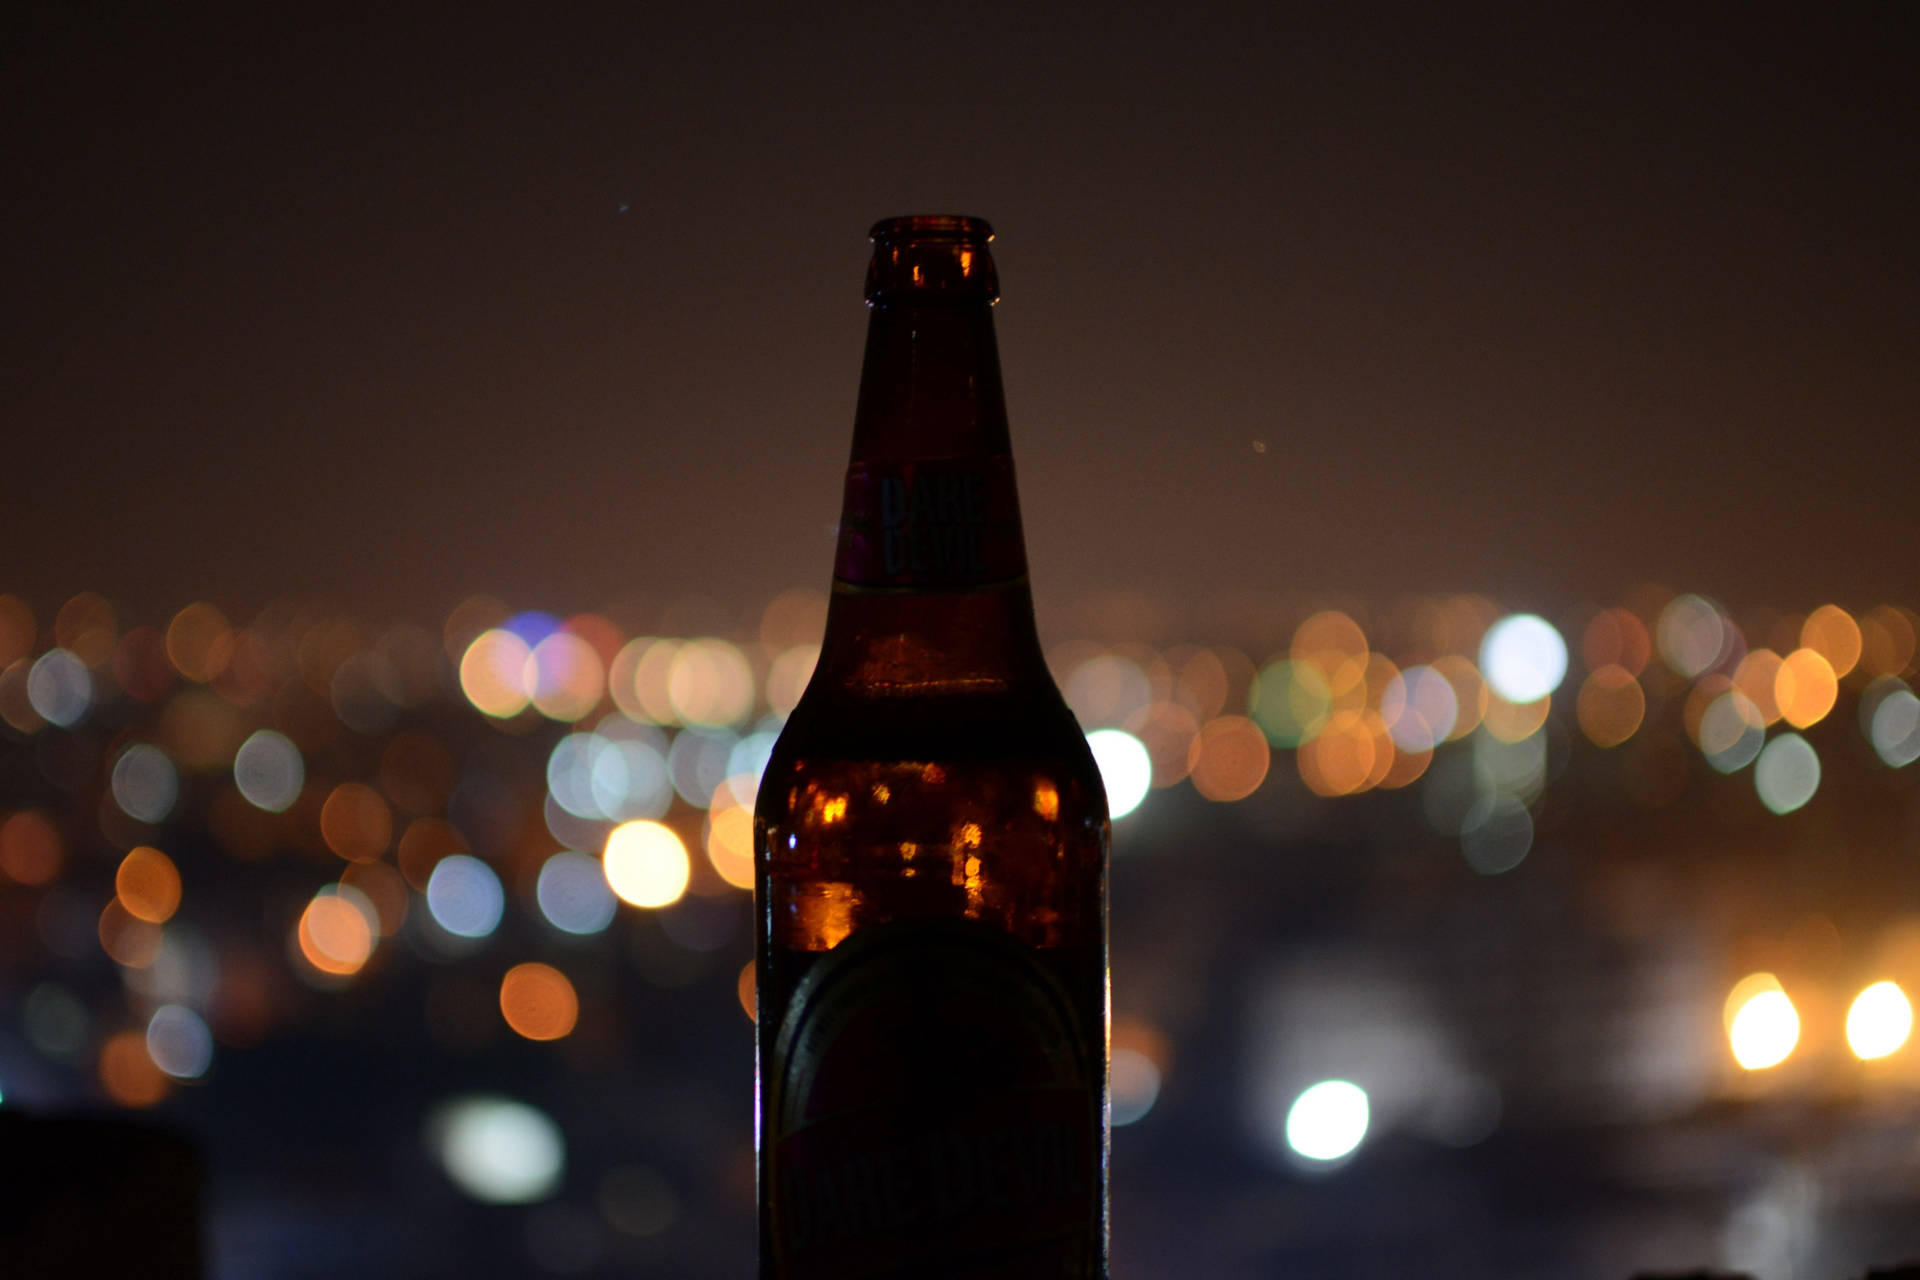 Beer Bottle And City Lights Wallpaper